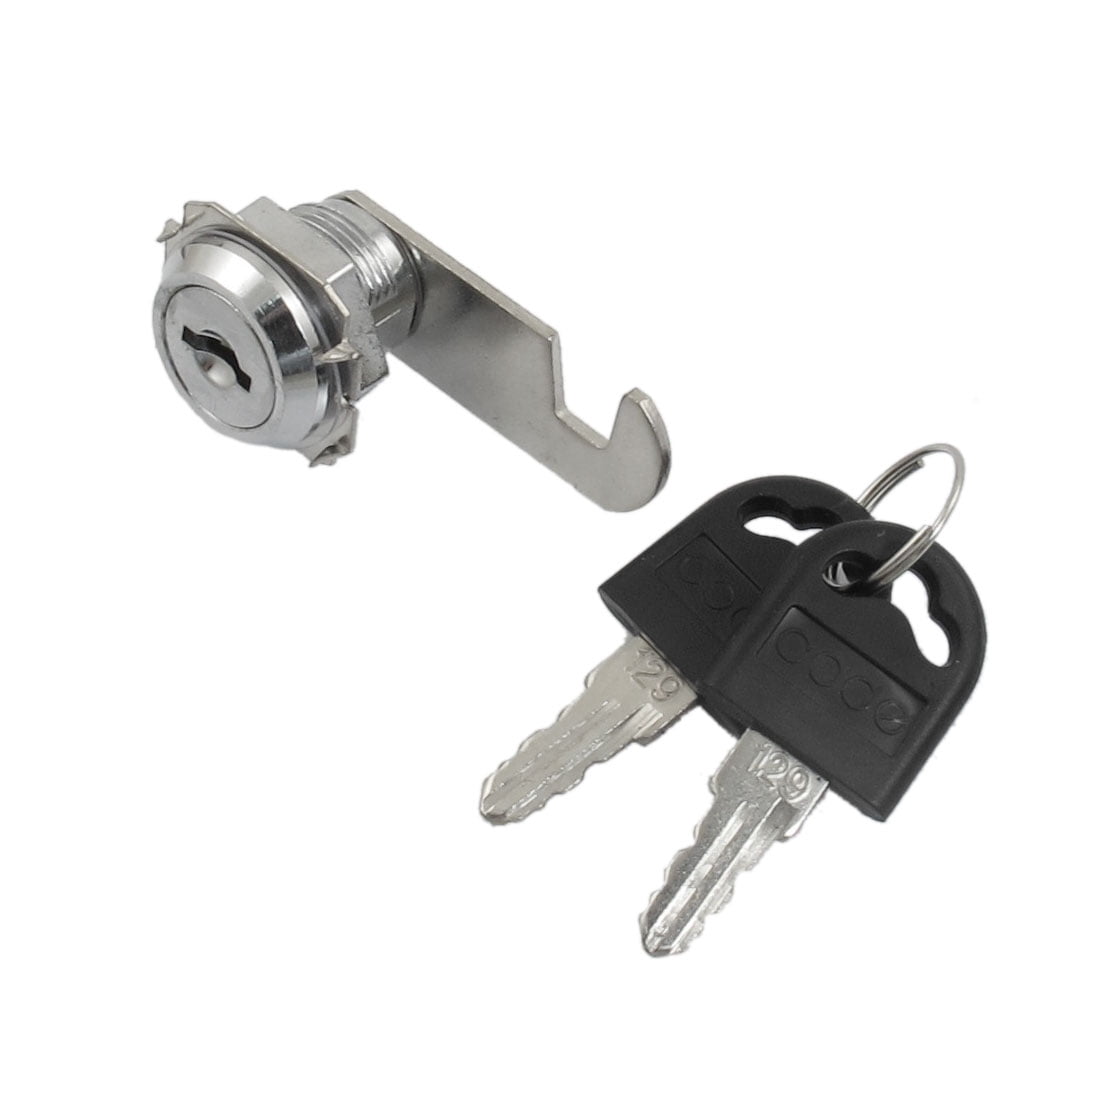 2 – ACS Cam Locks Camlock Tool box Lock mailbox type lock NEW cabinet lock 